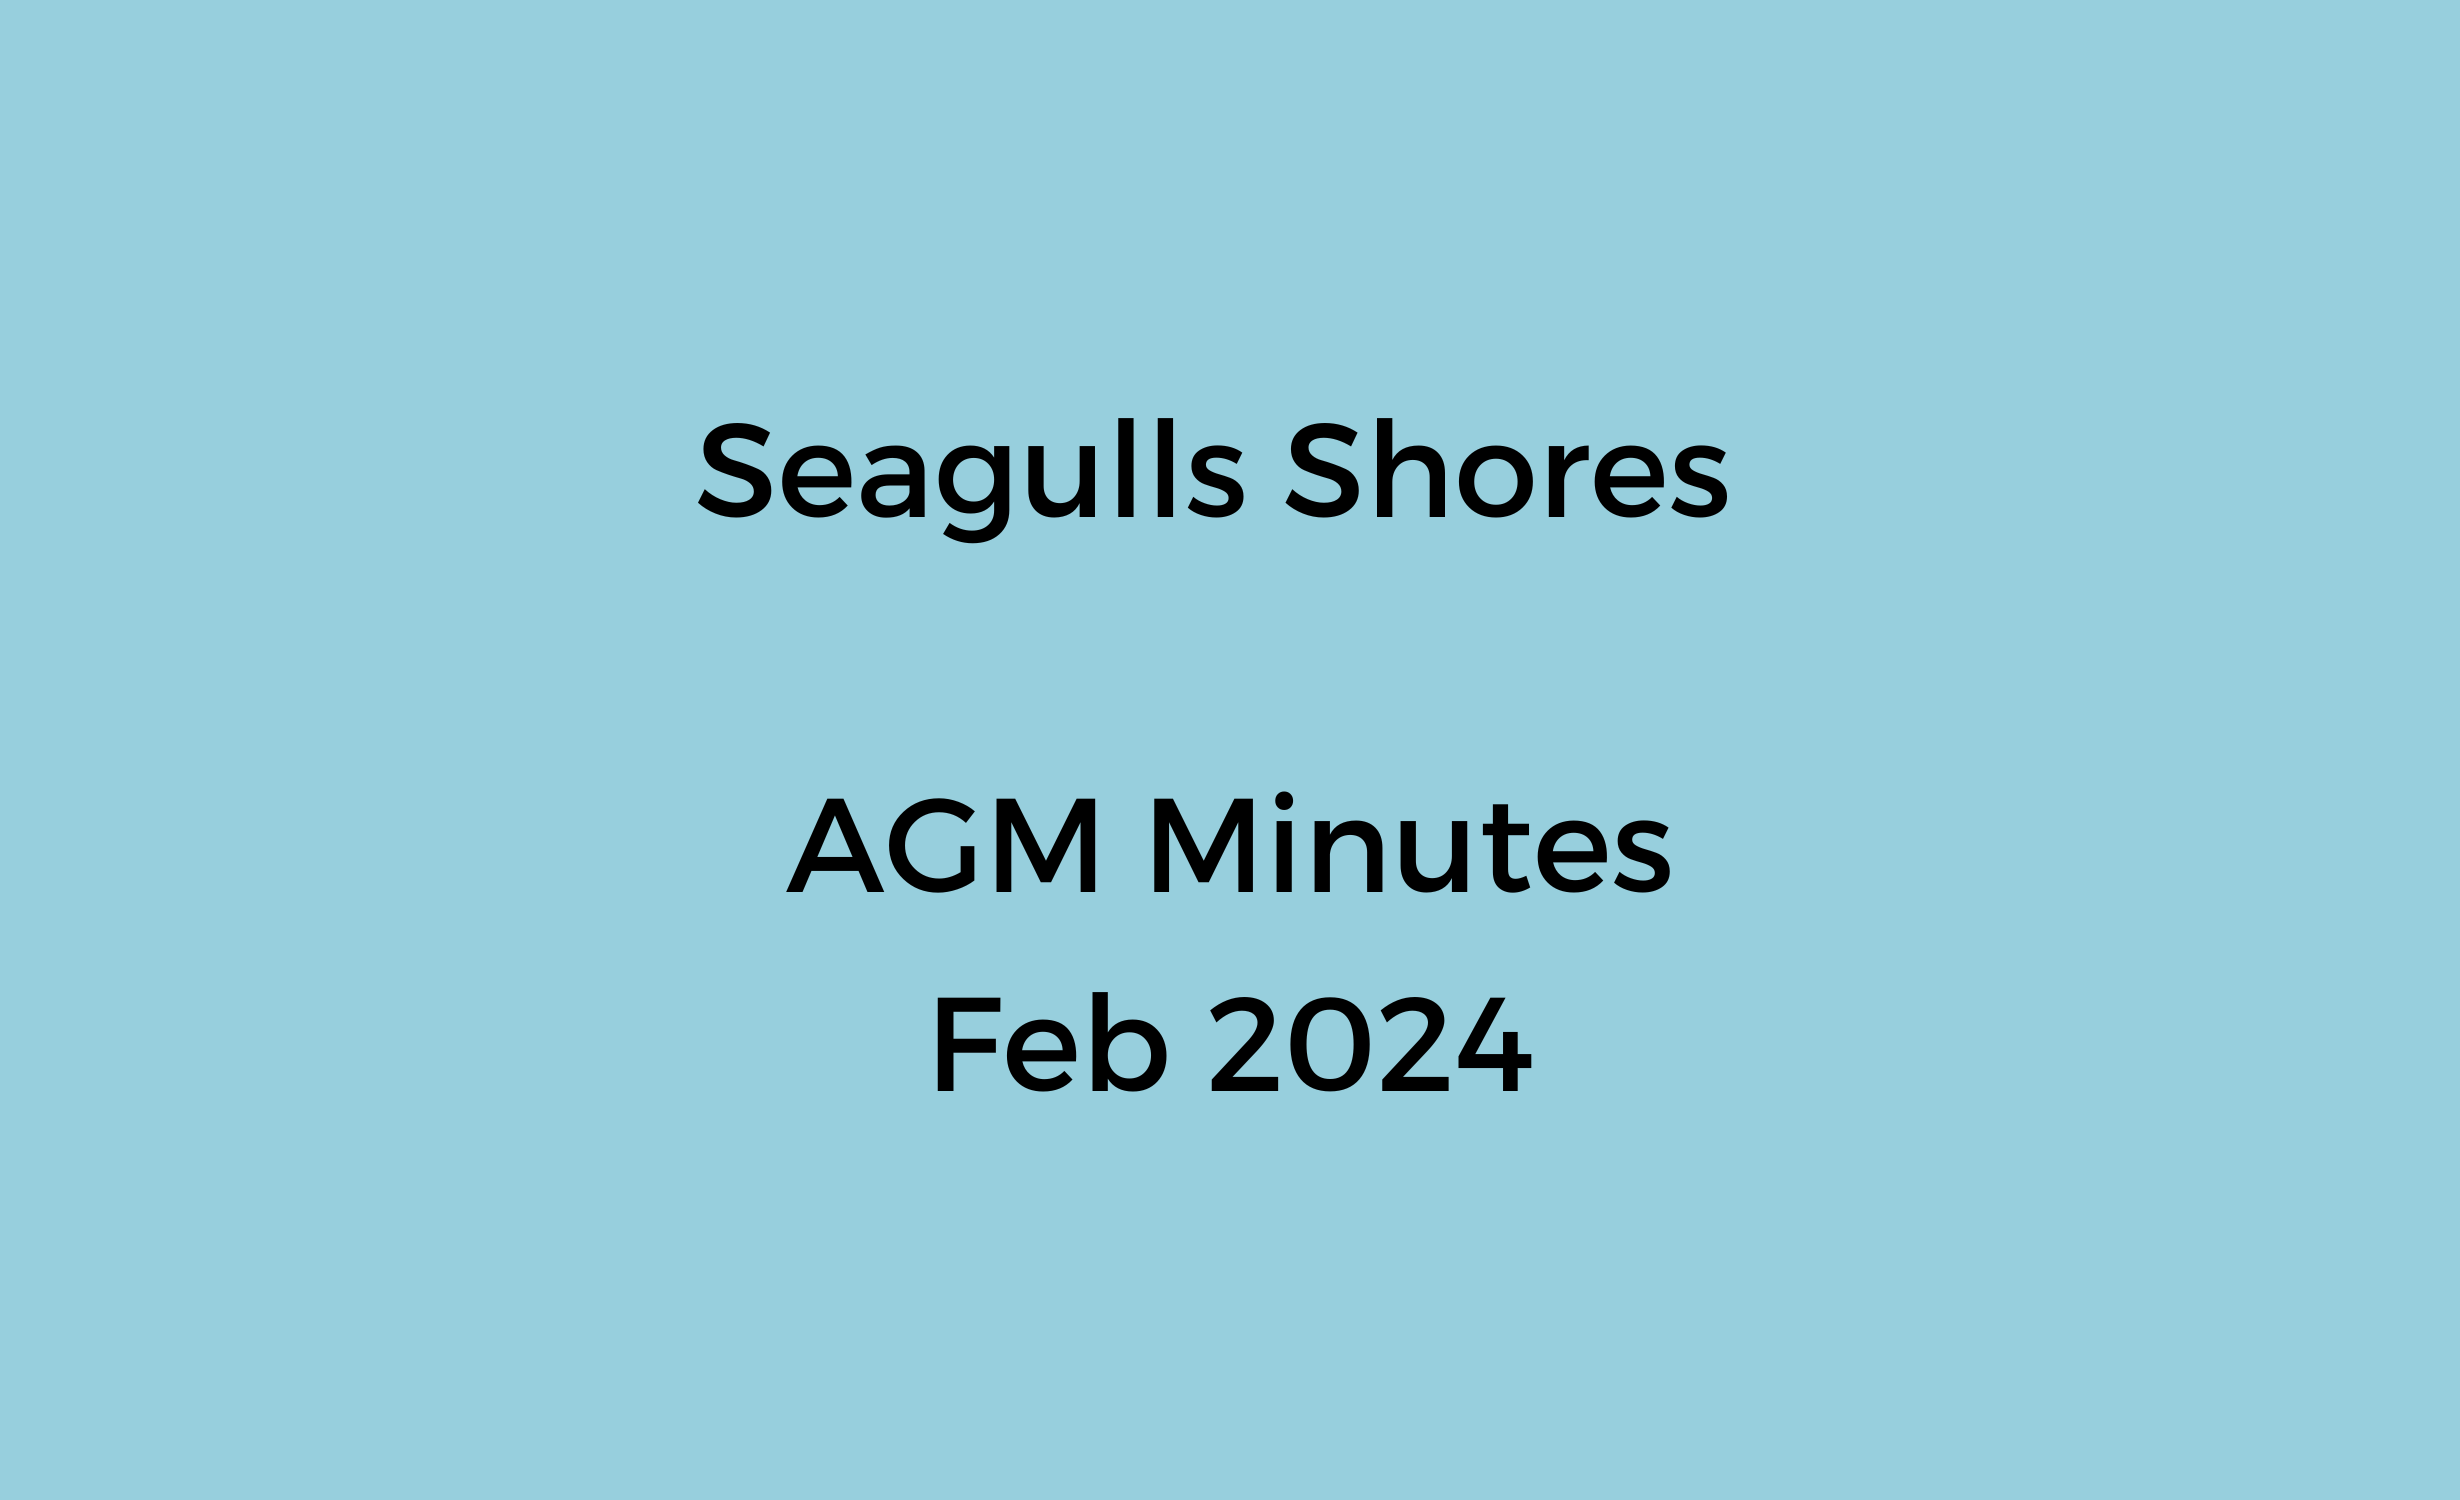 Seagulls Shores AGM 2024